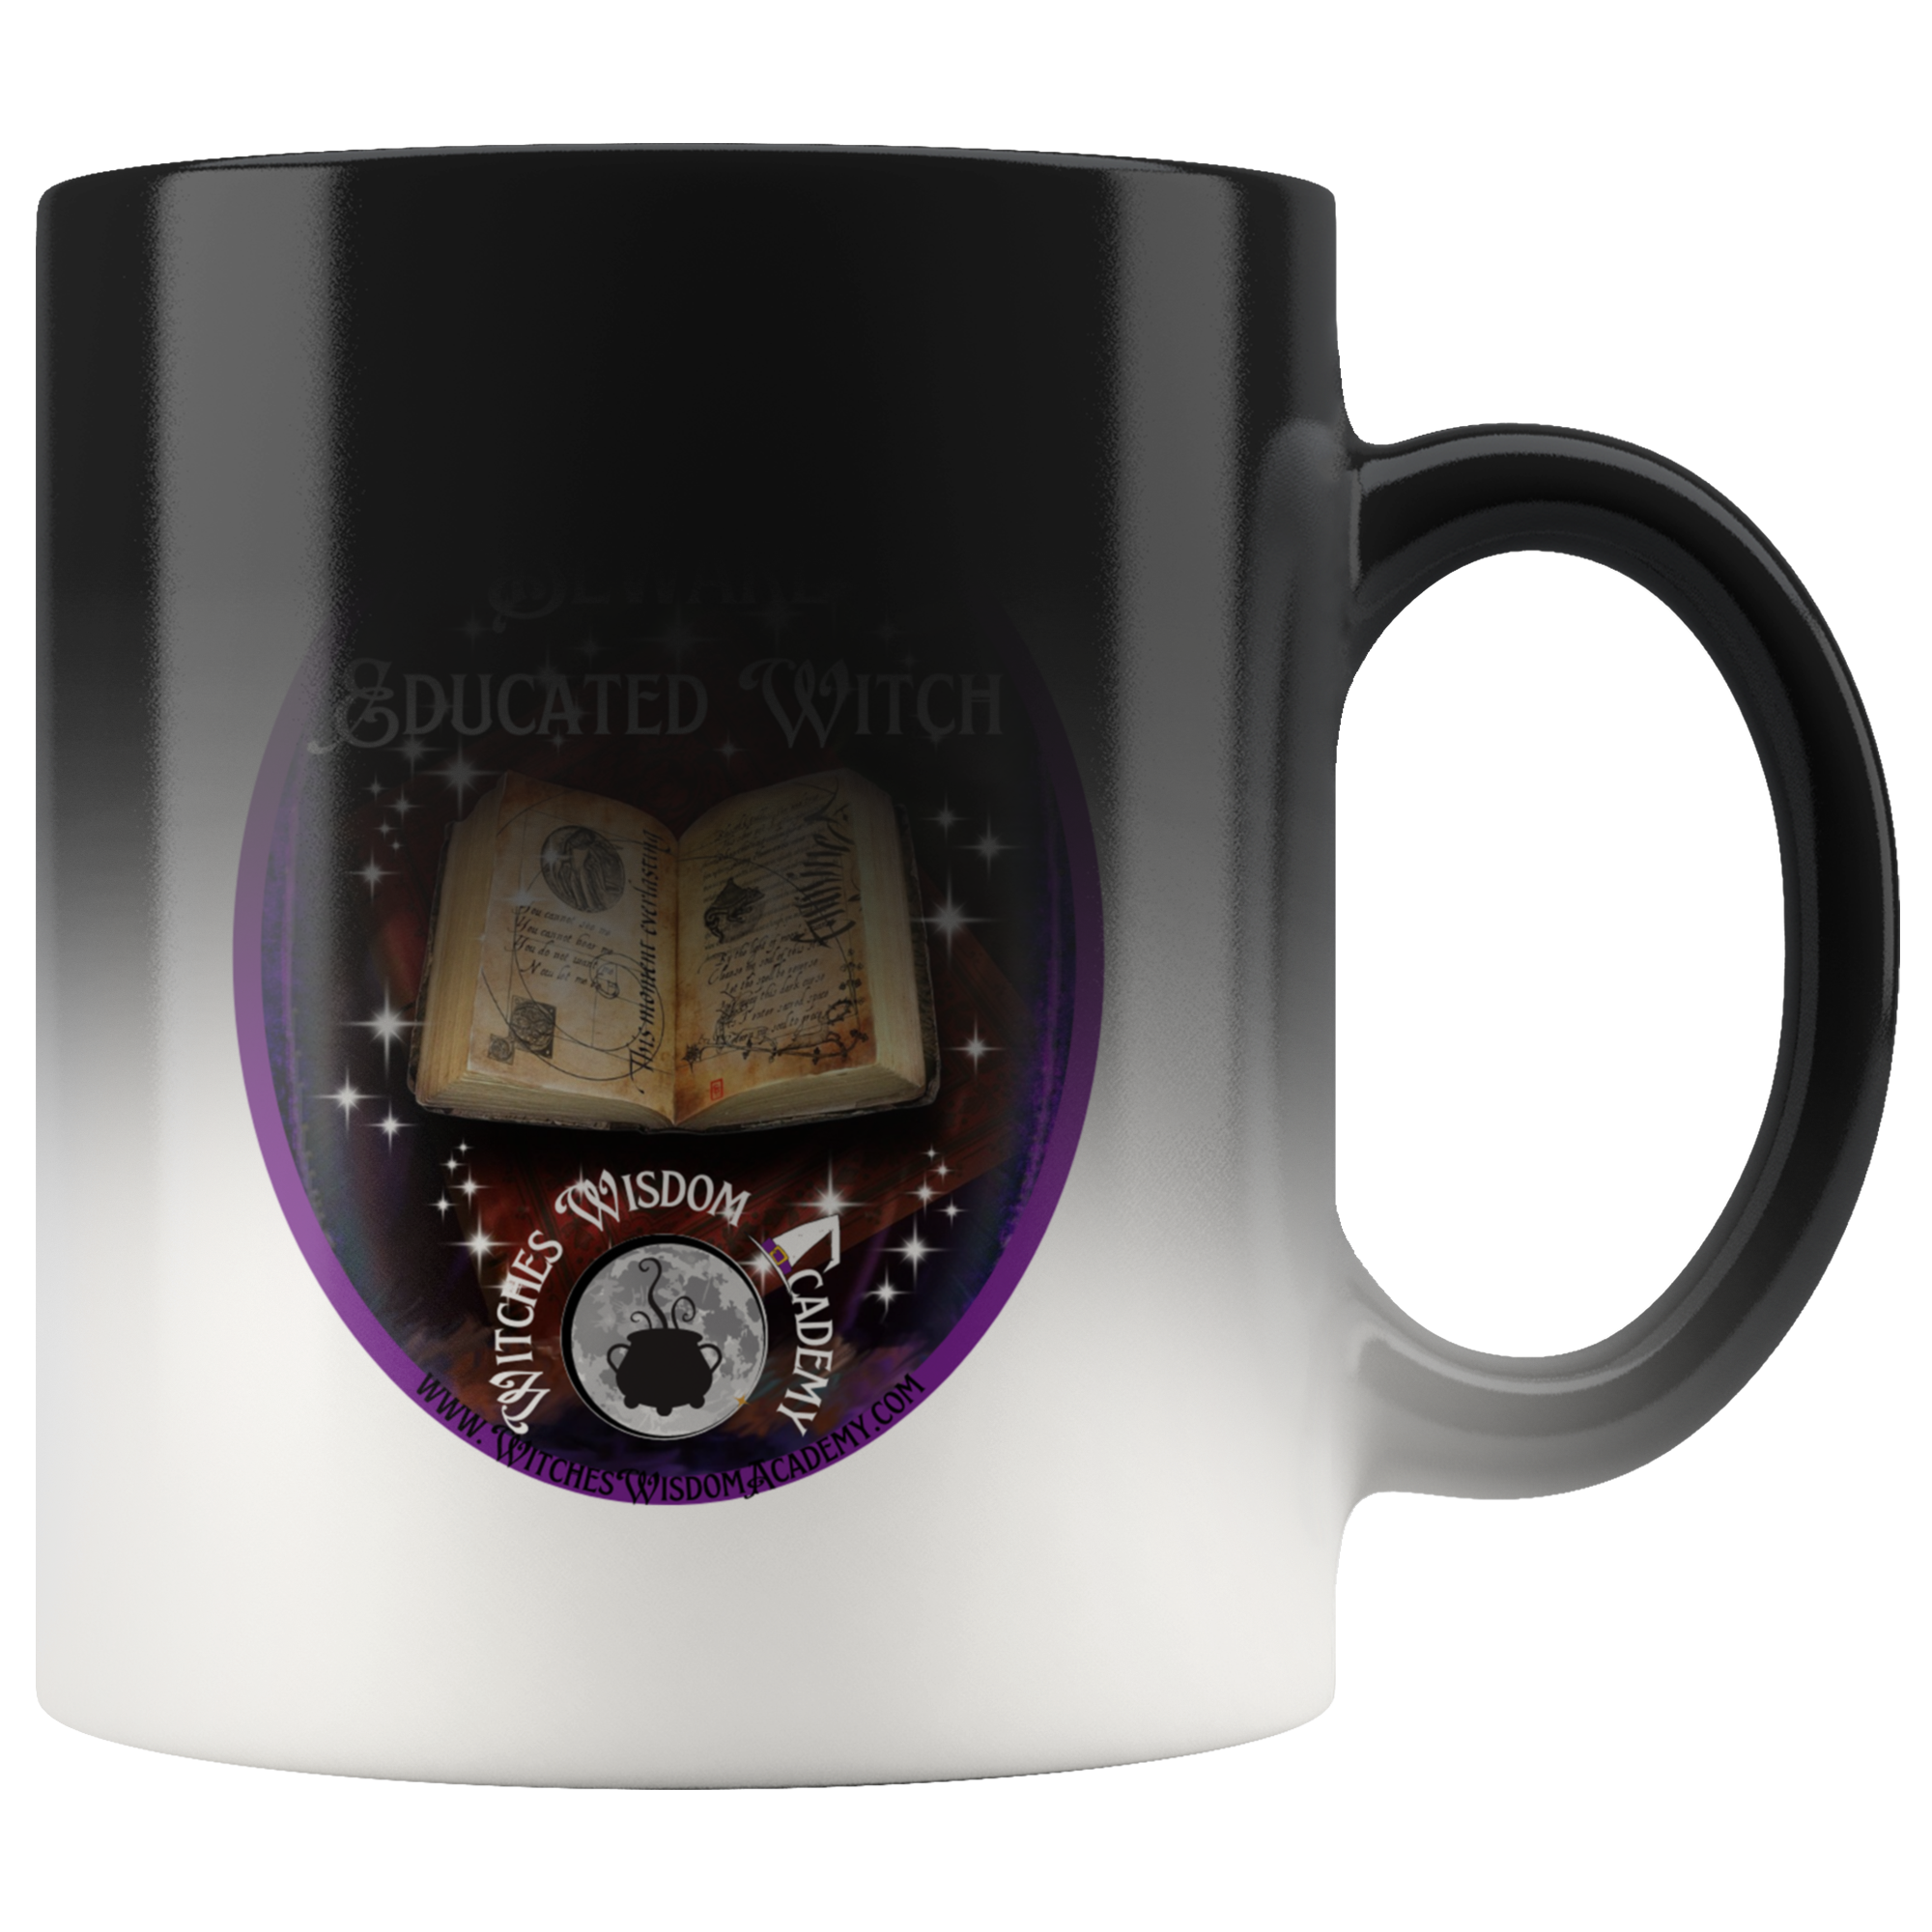 Beware Educated Witch - Magic Mug